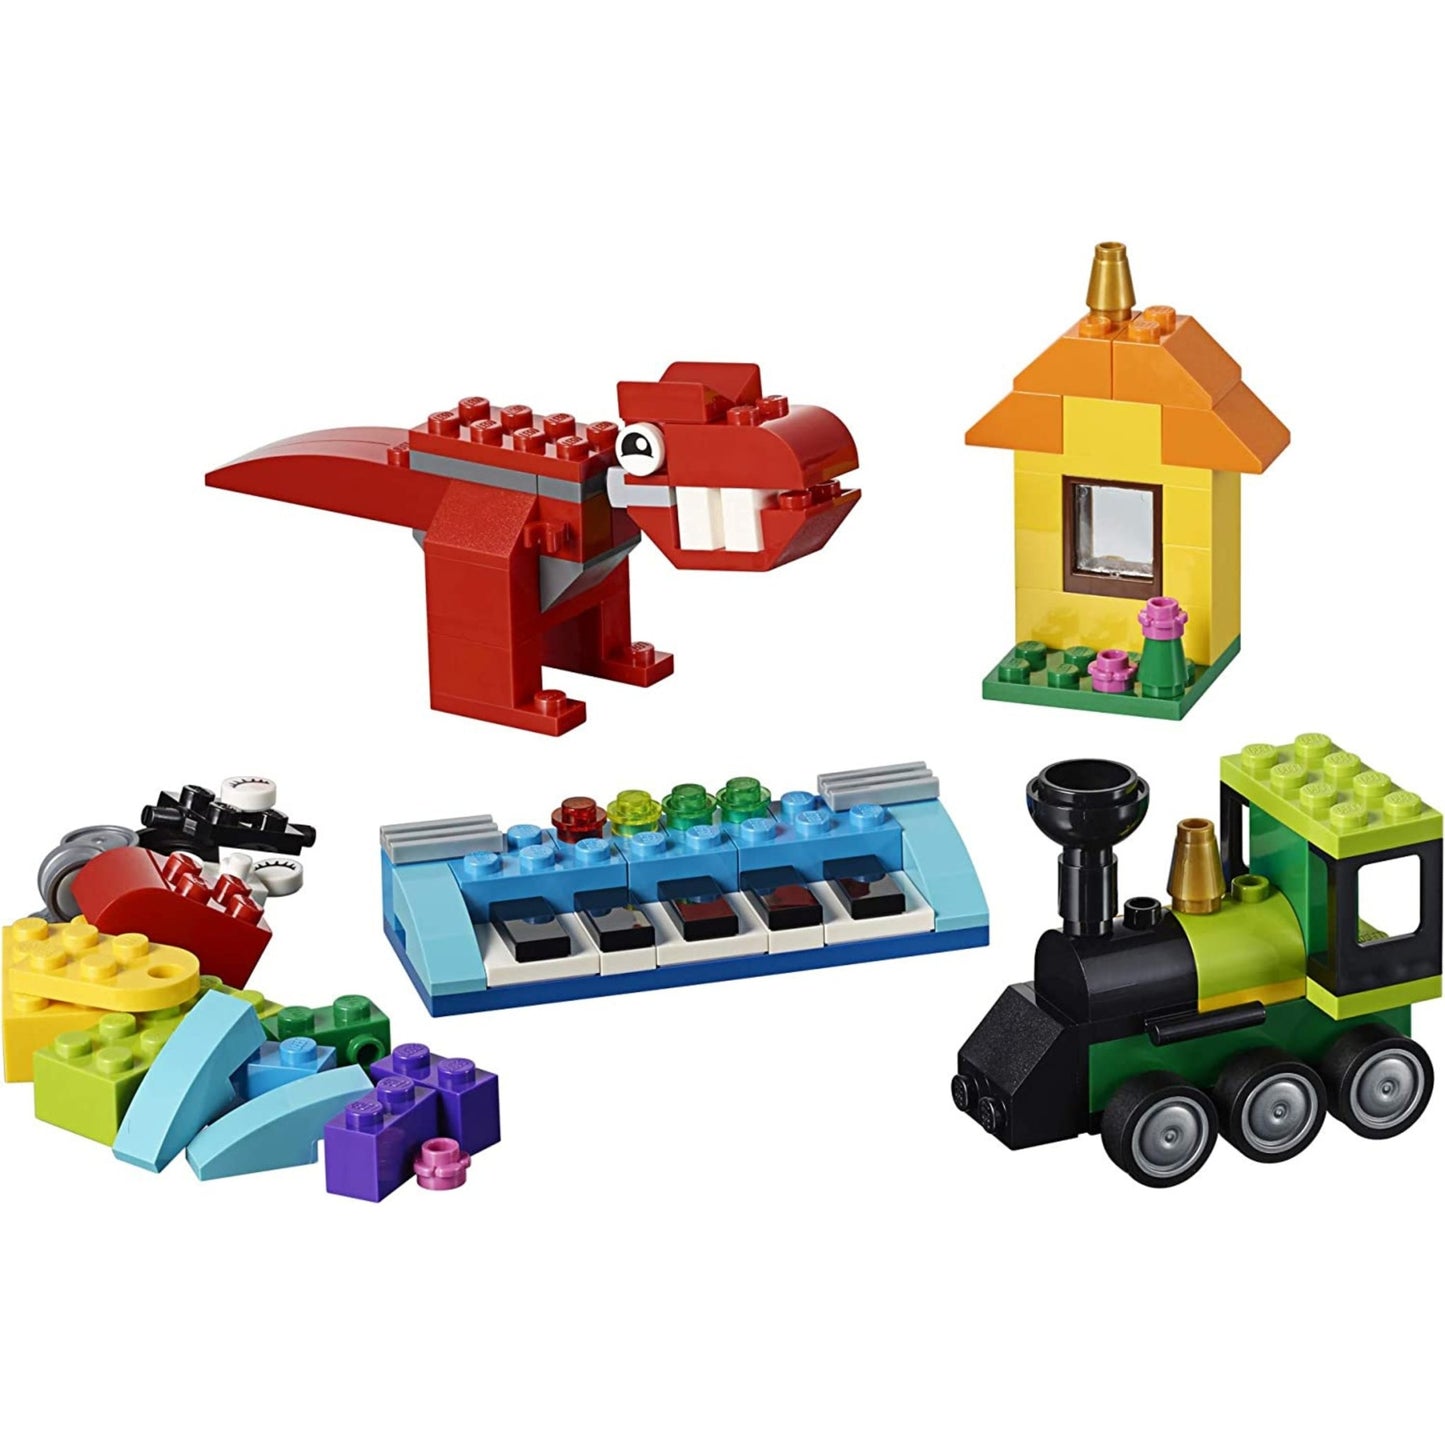 LEGO Classic Bricks and Ideas 11001 Building Kit (123 Pieces)